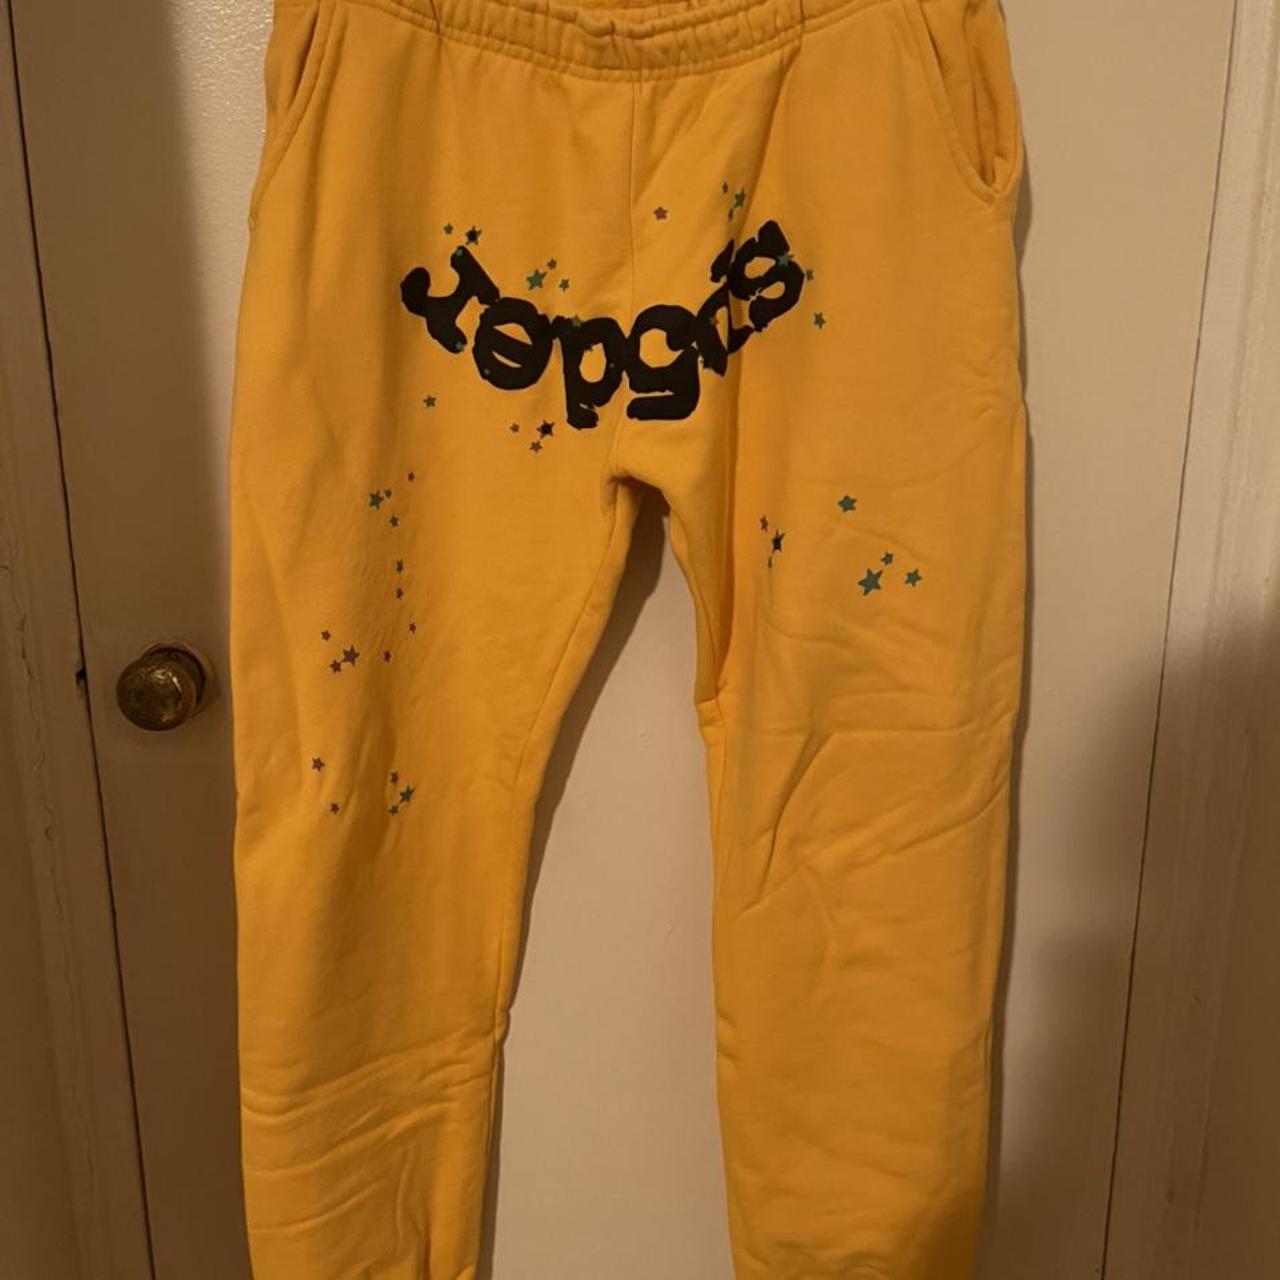 Spider Worldwide sweatpants (Yellow), Worn 2 times